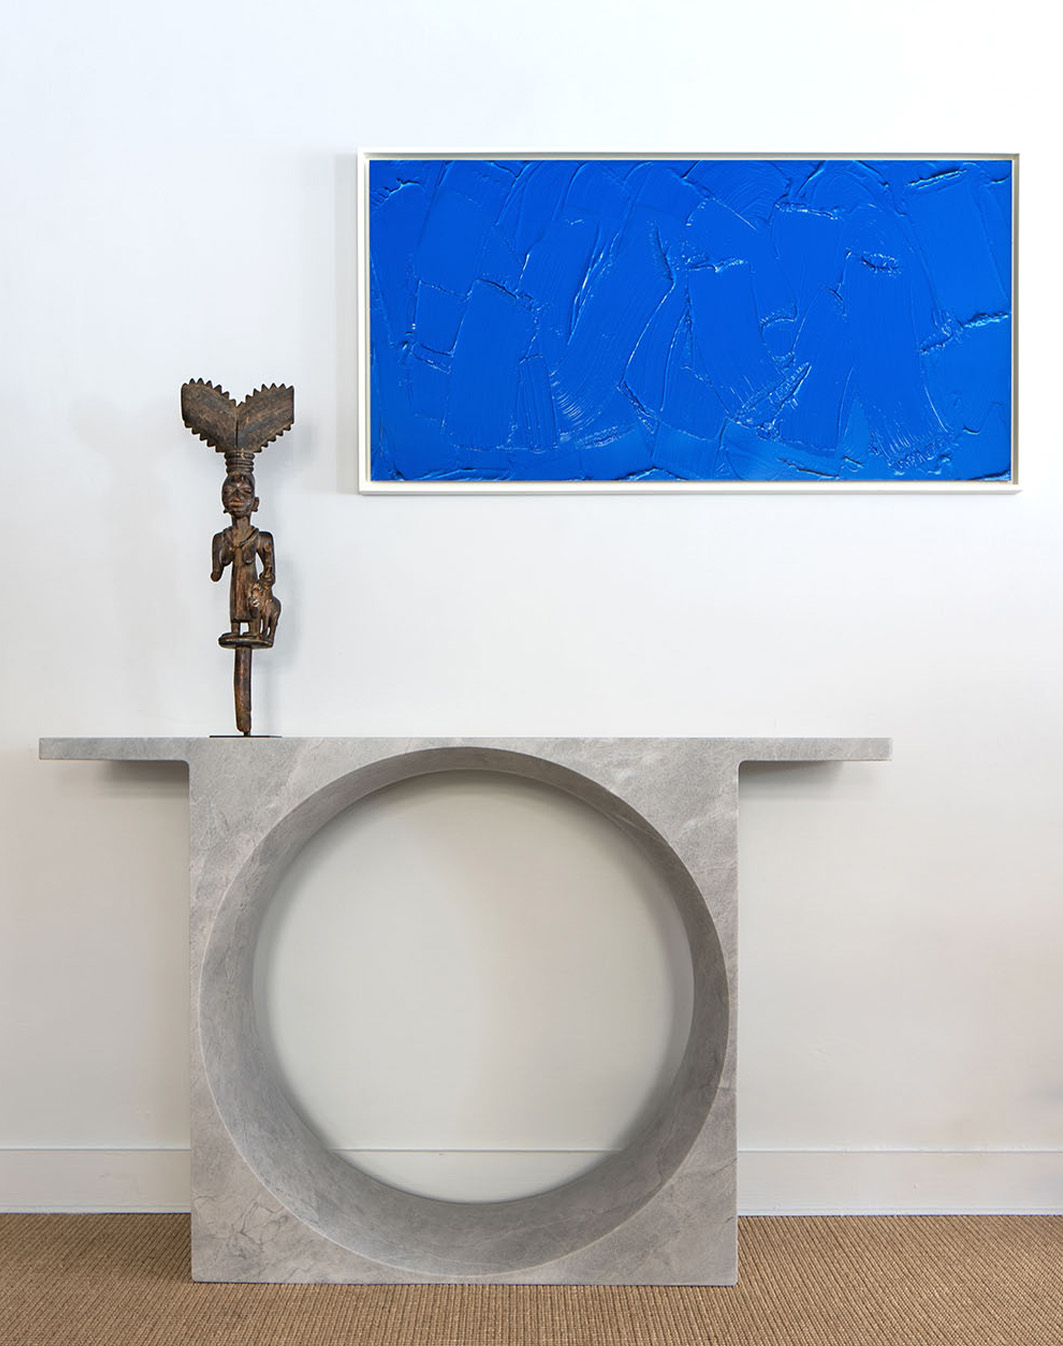 Roger Capron - Lucas Ratton x kamel mennour x Galerie kreo in Saint-Tropez